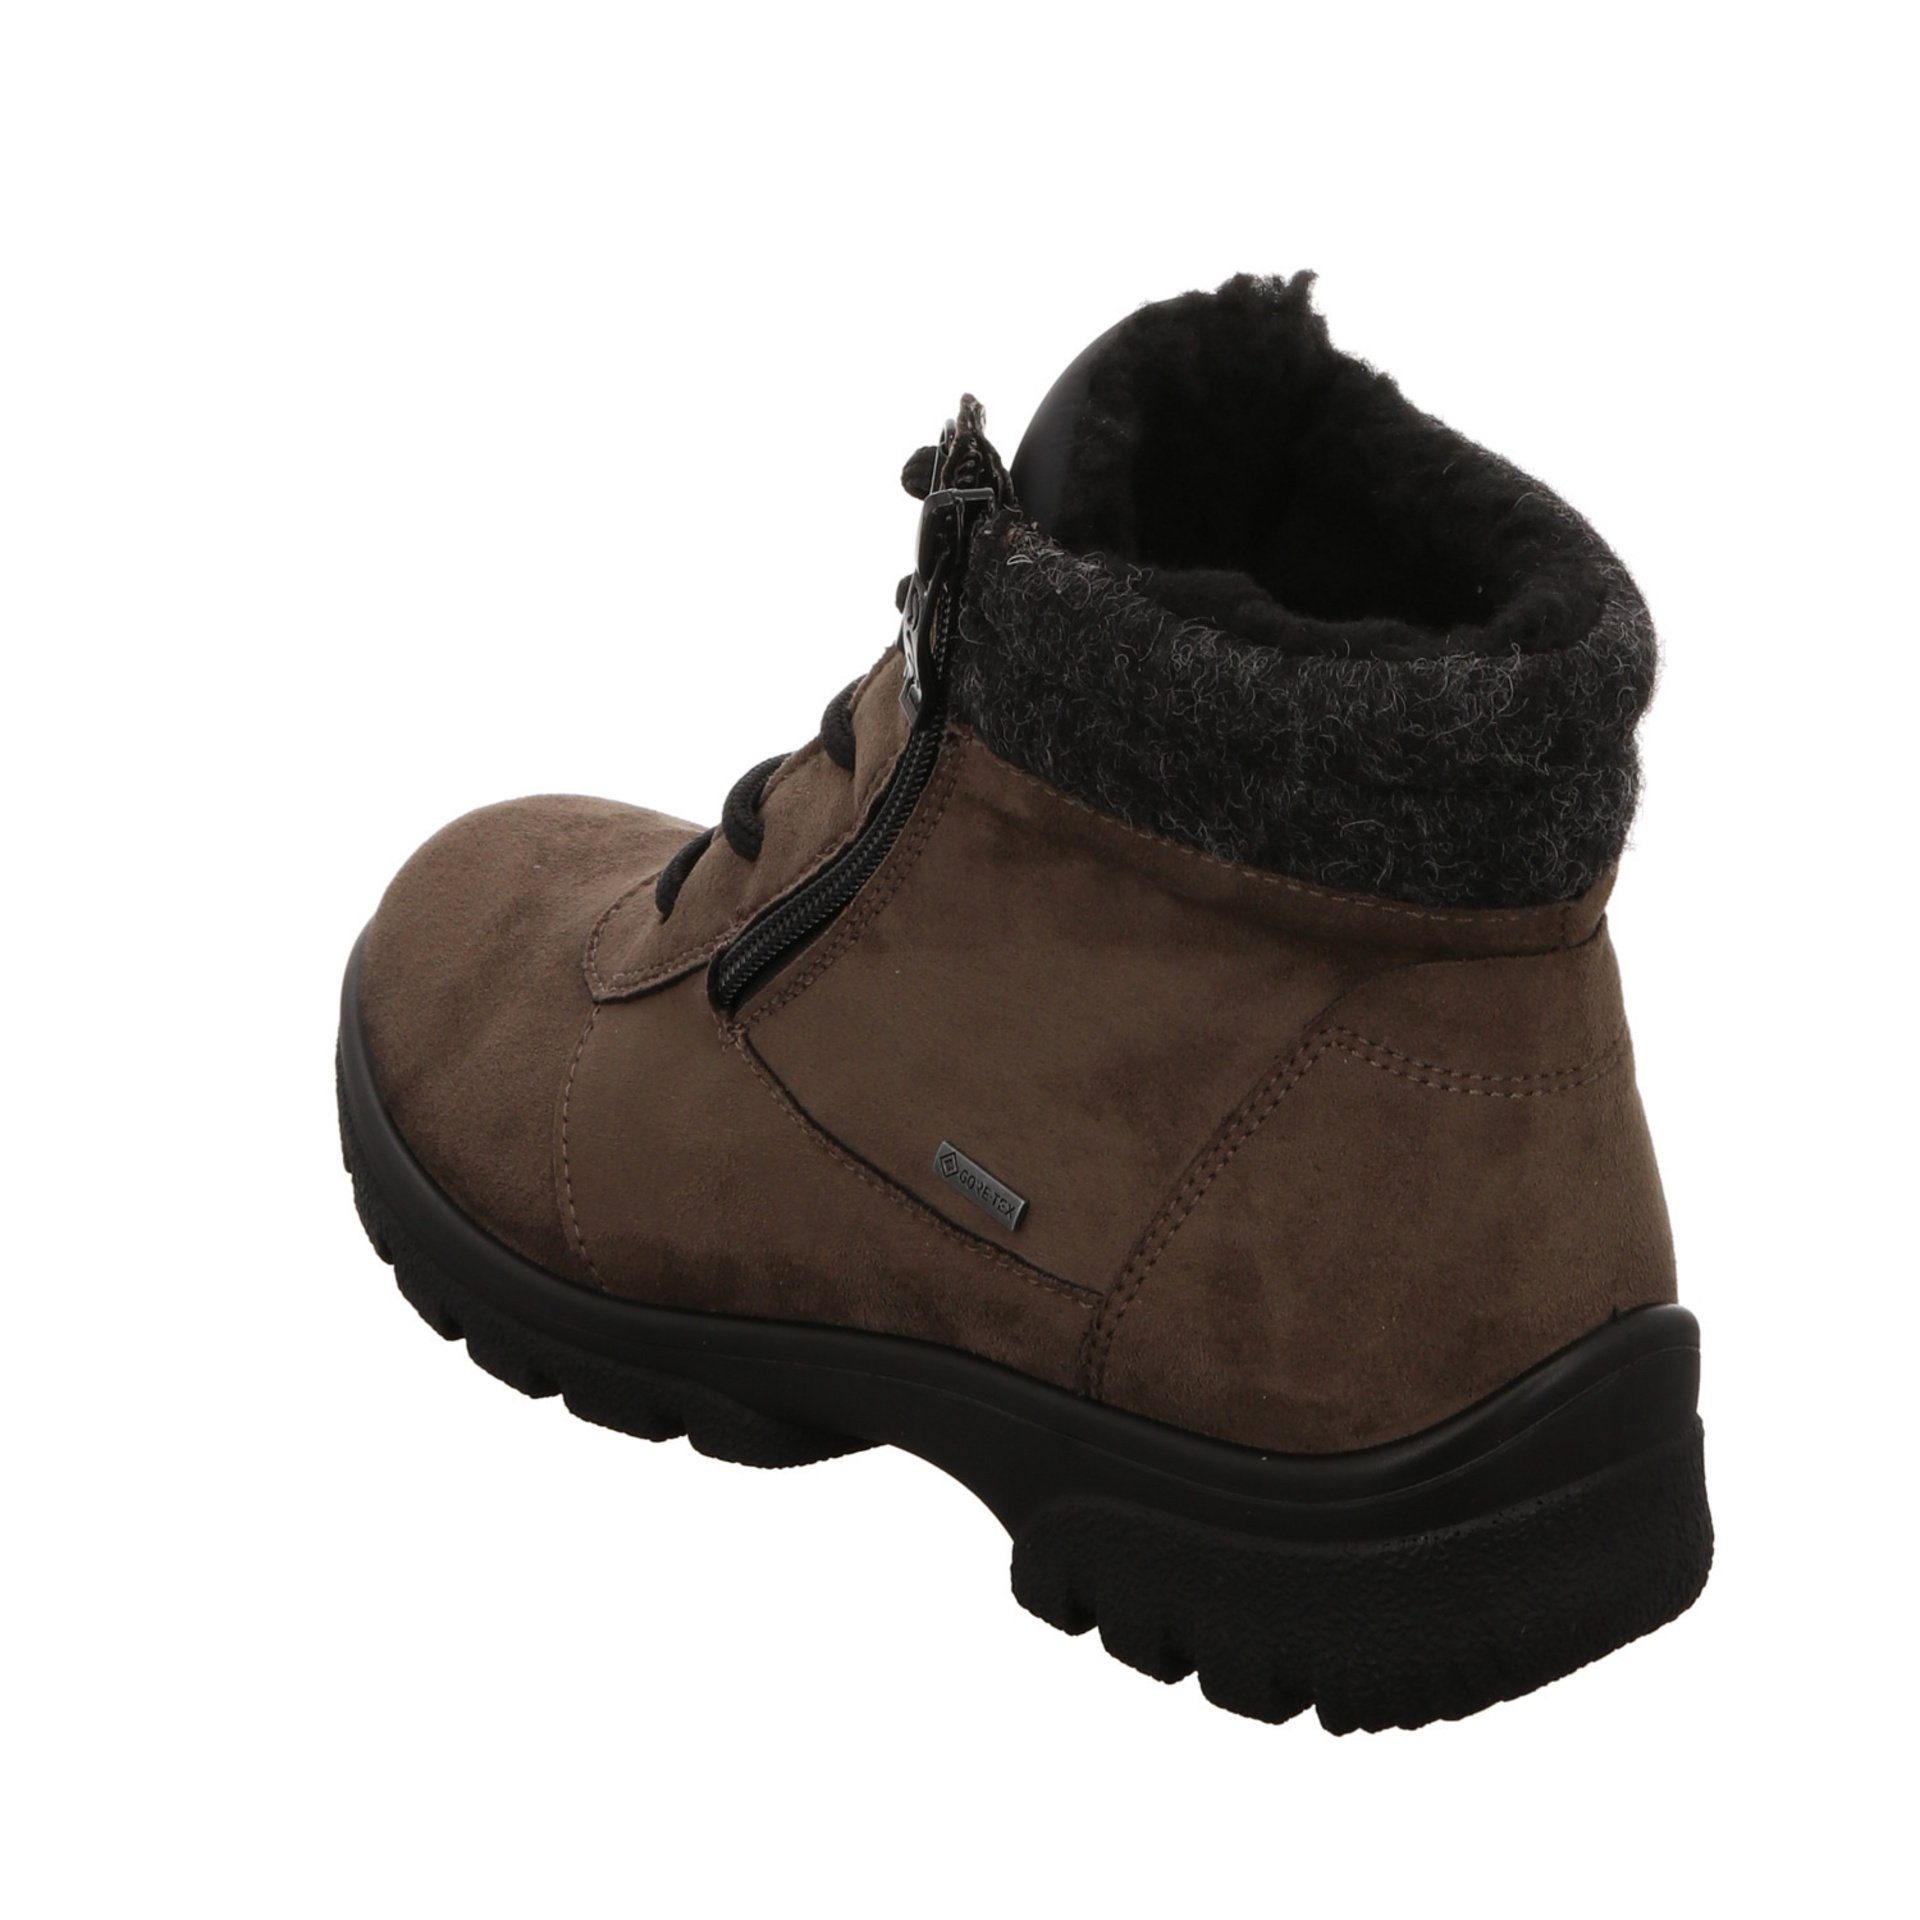 Snowboots Saas-Fee Snowboots Boots Schuhe Ara Leder-/Textilkombination taiga/schwarz Damen